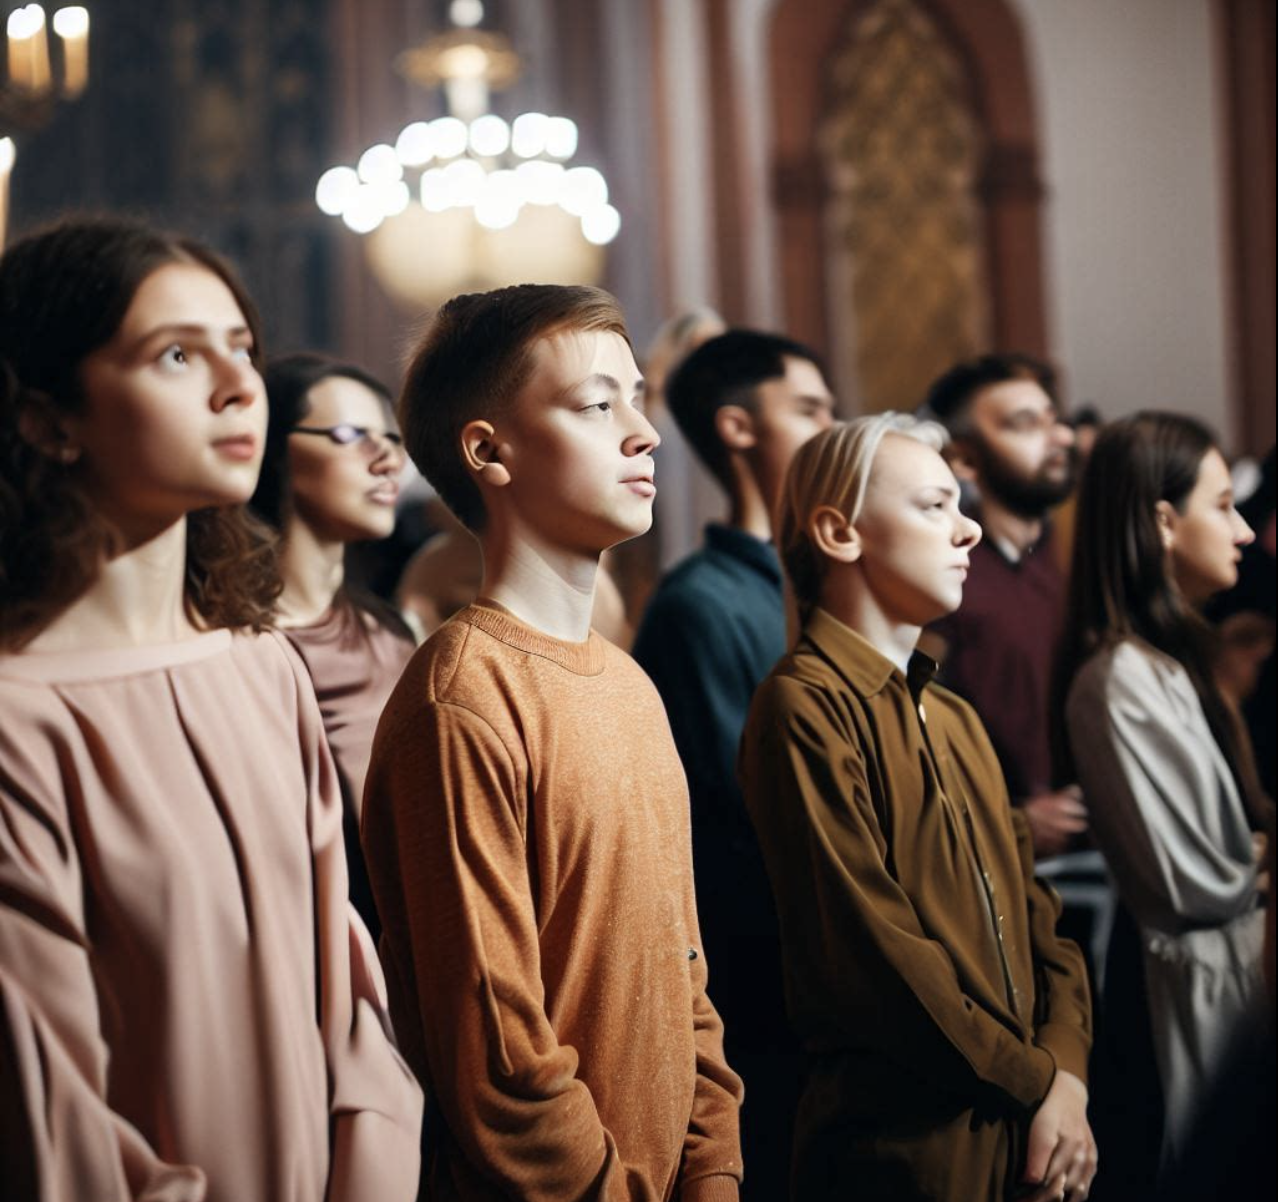 Youth in Church